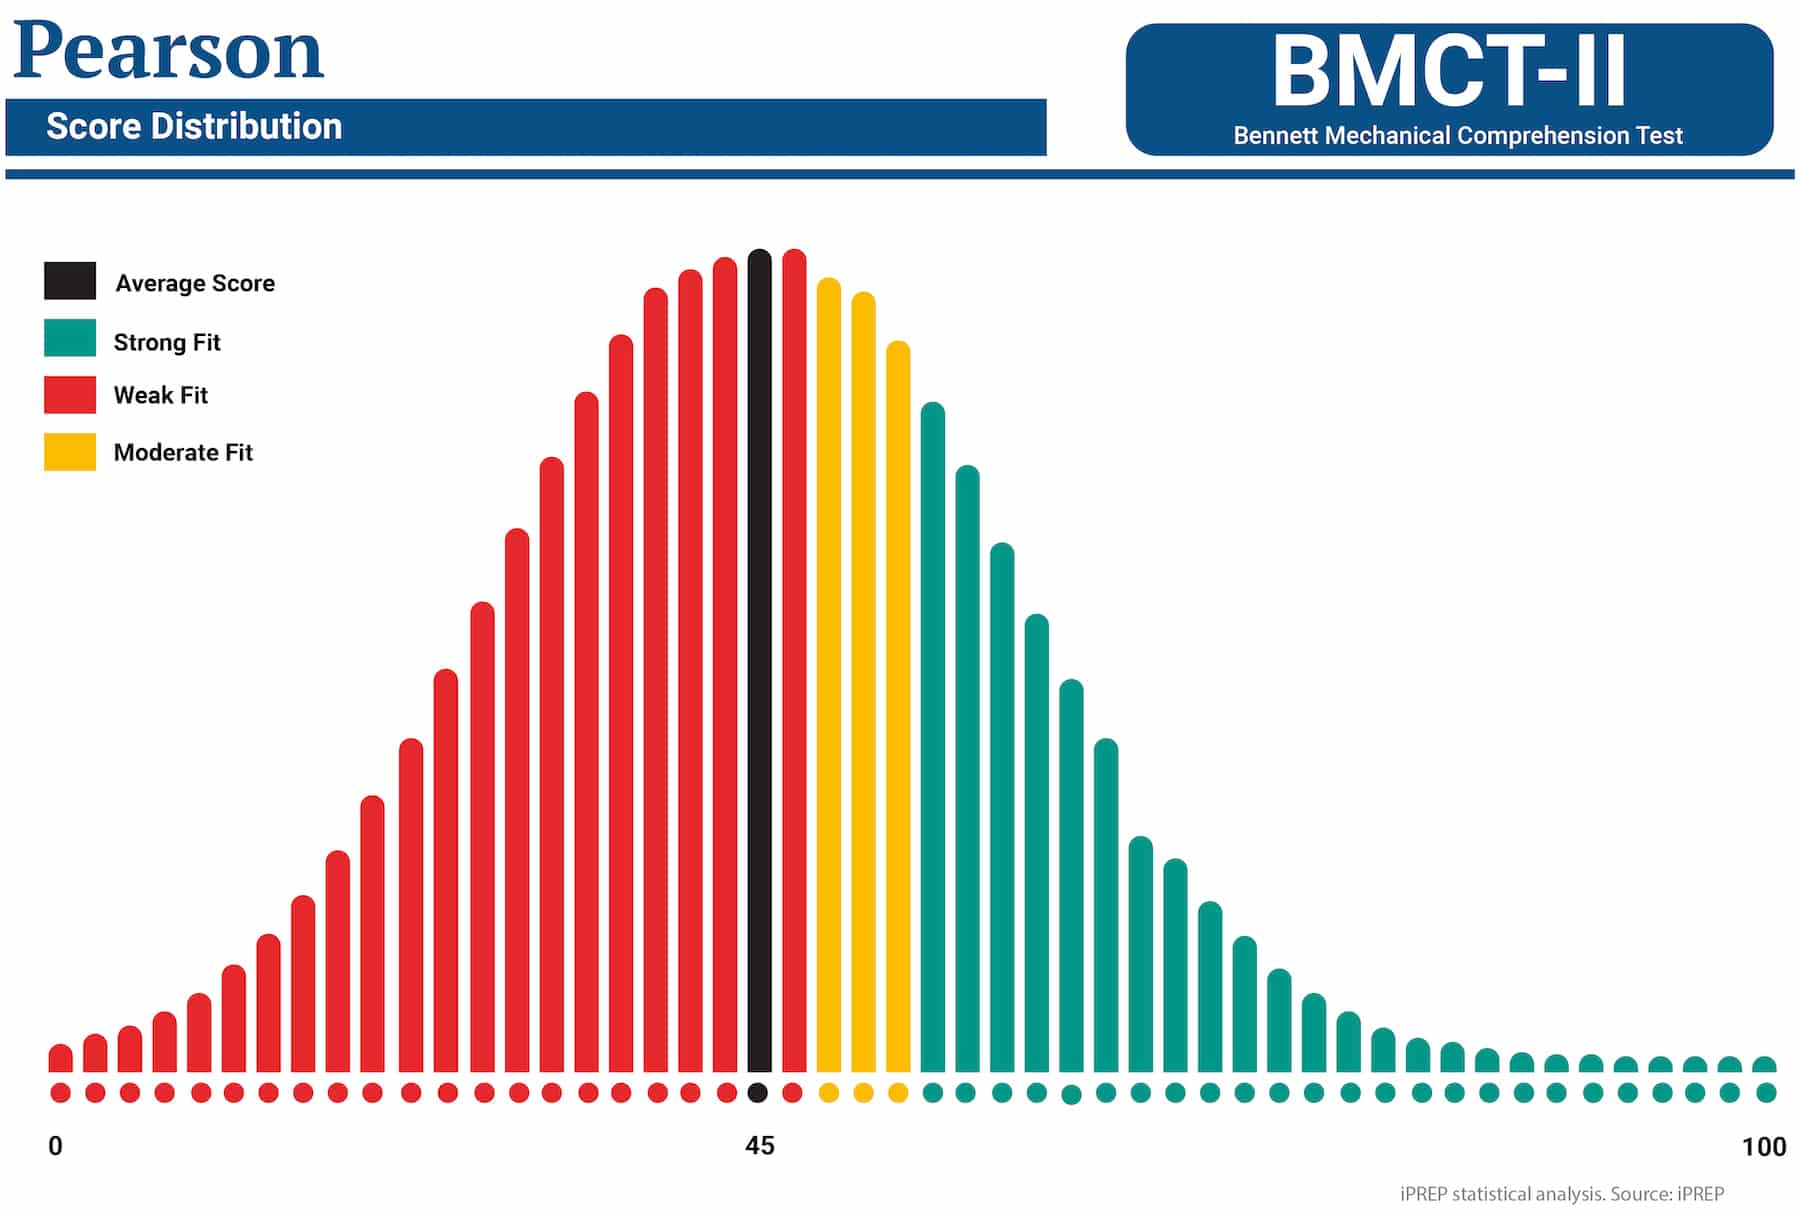 Bennett BMCT Test score distribution statistical analysis. Source: iPREP